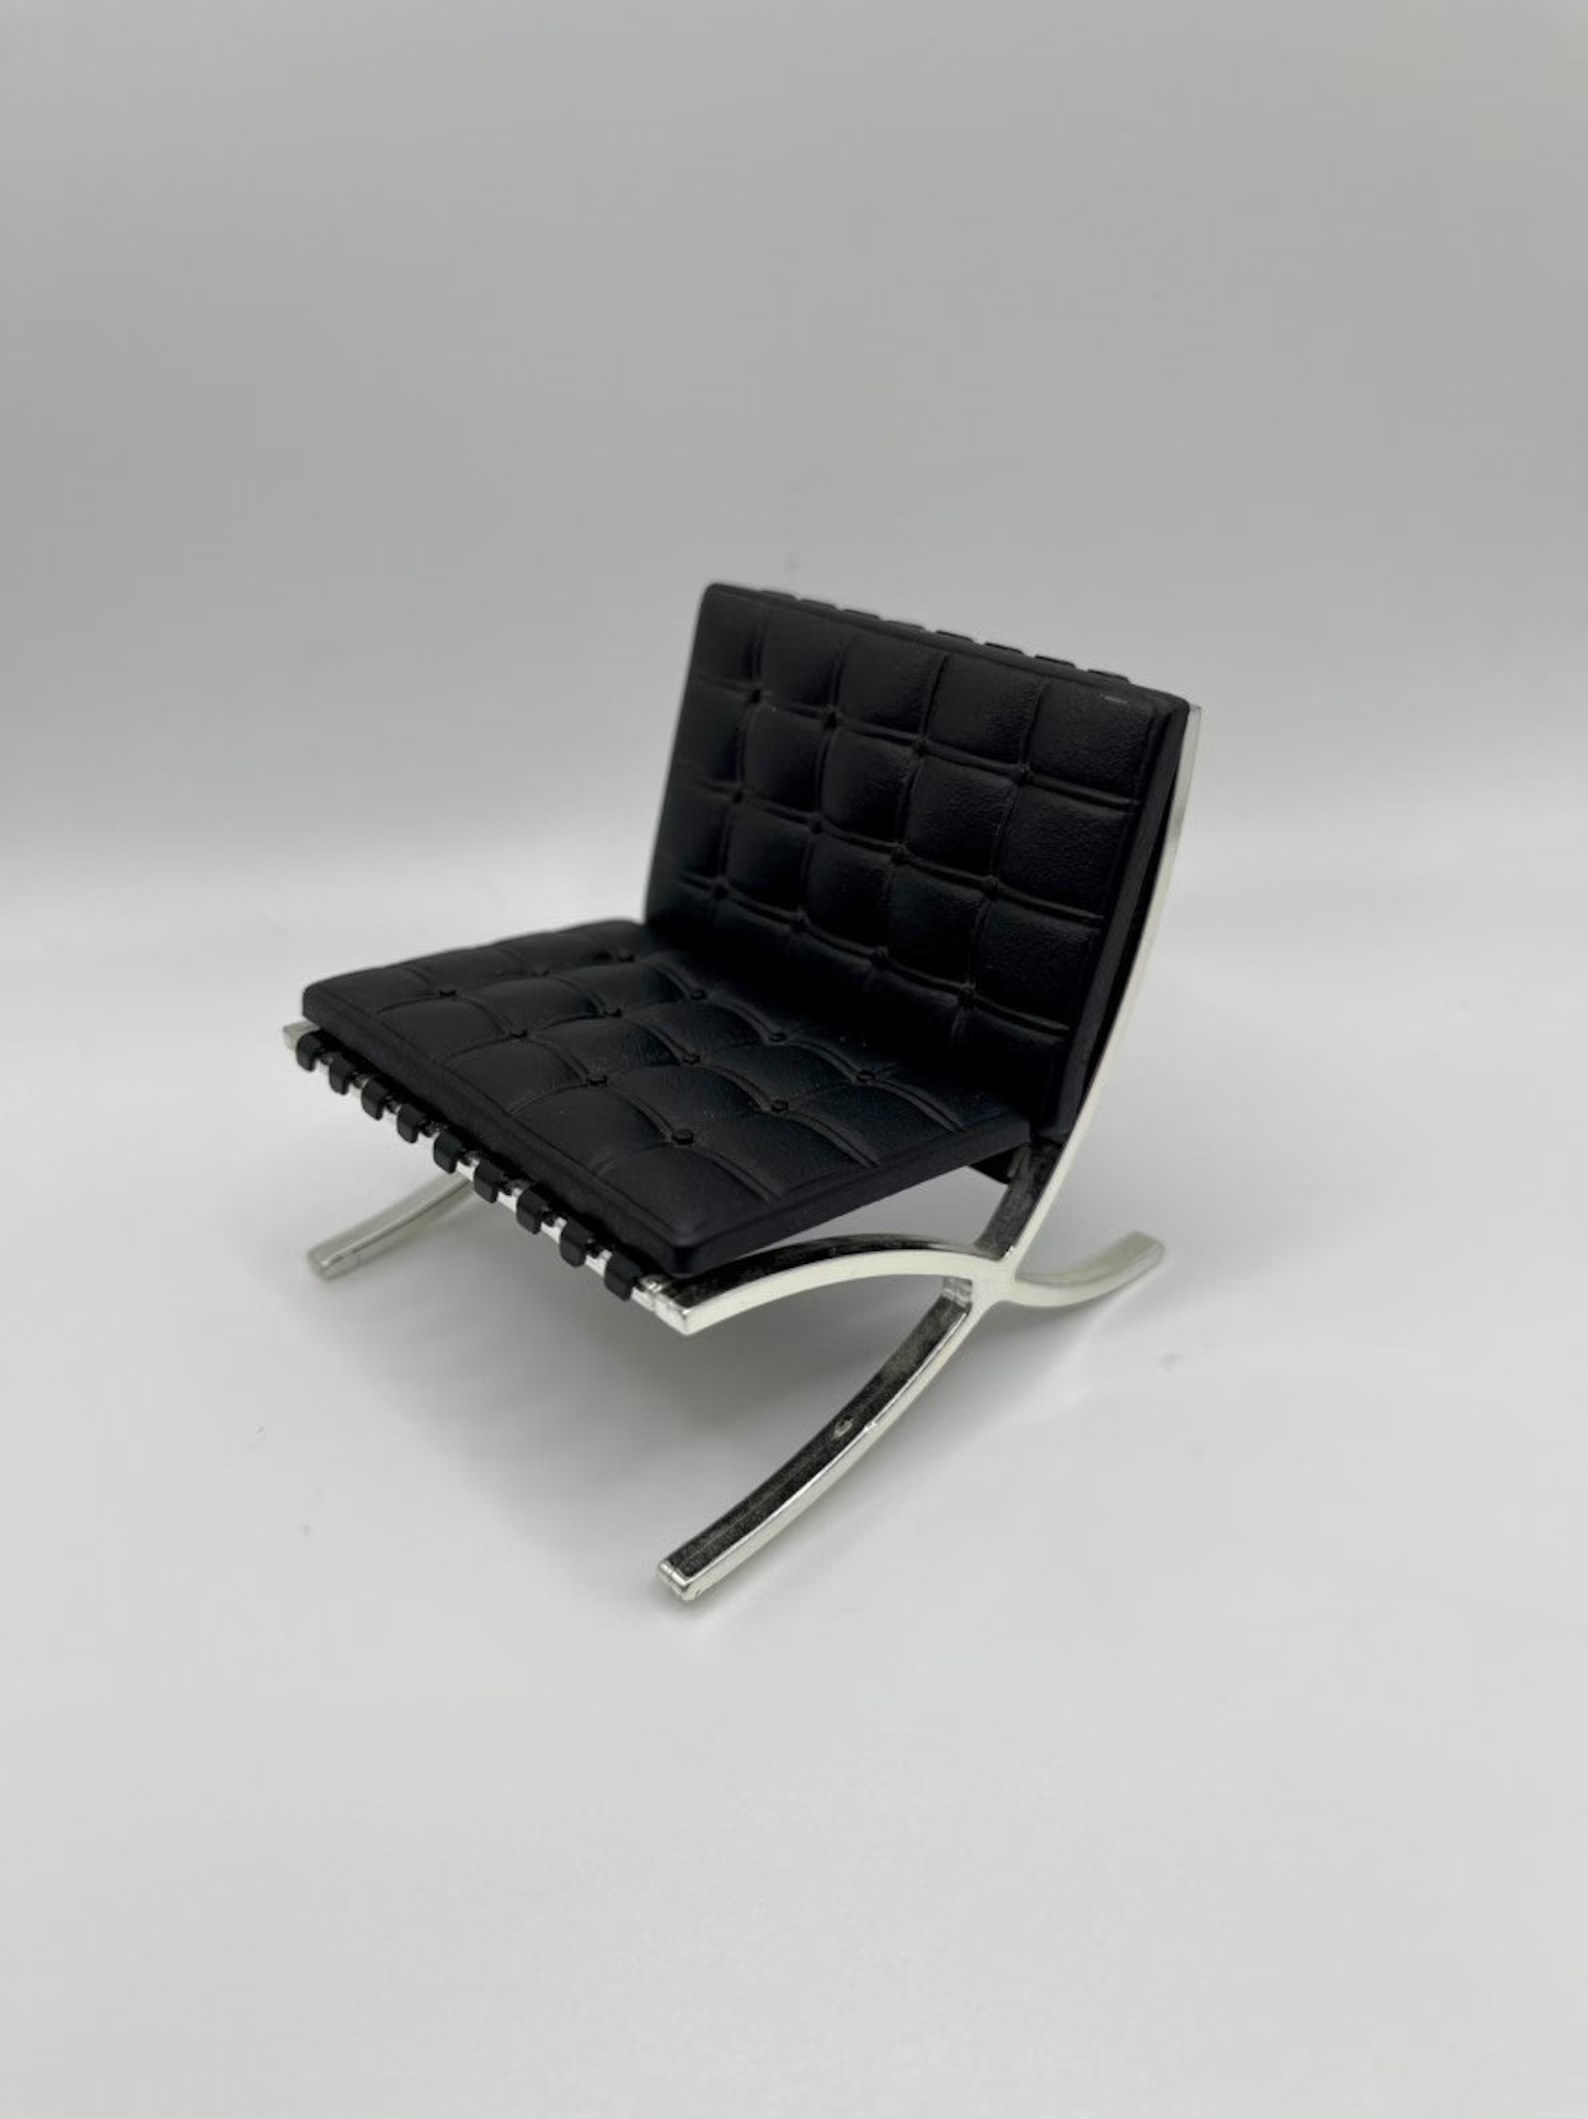 Barcelona Chair Desk Display Model